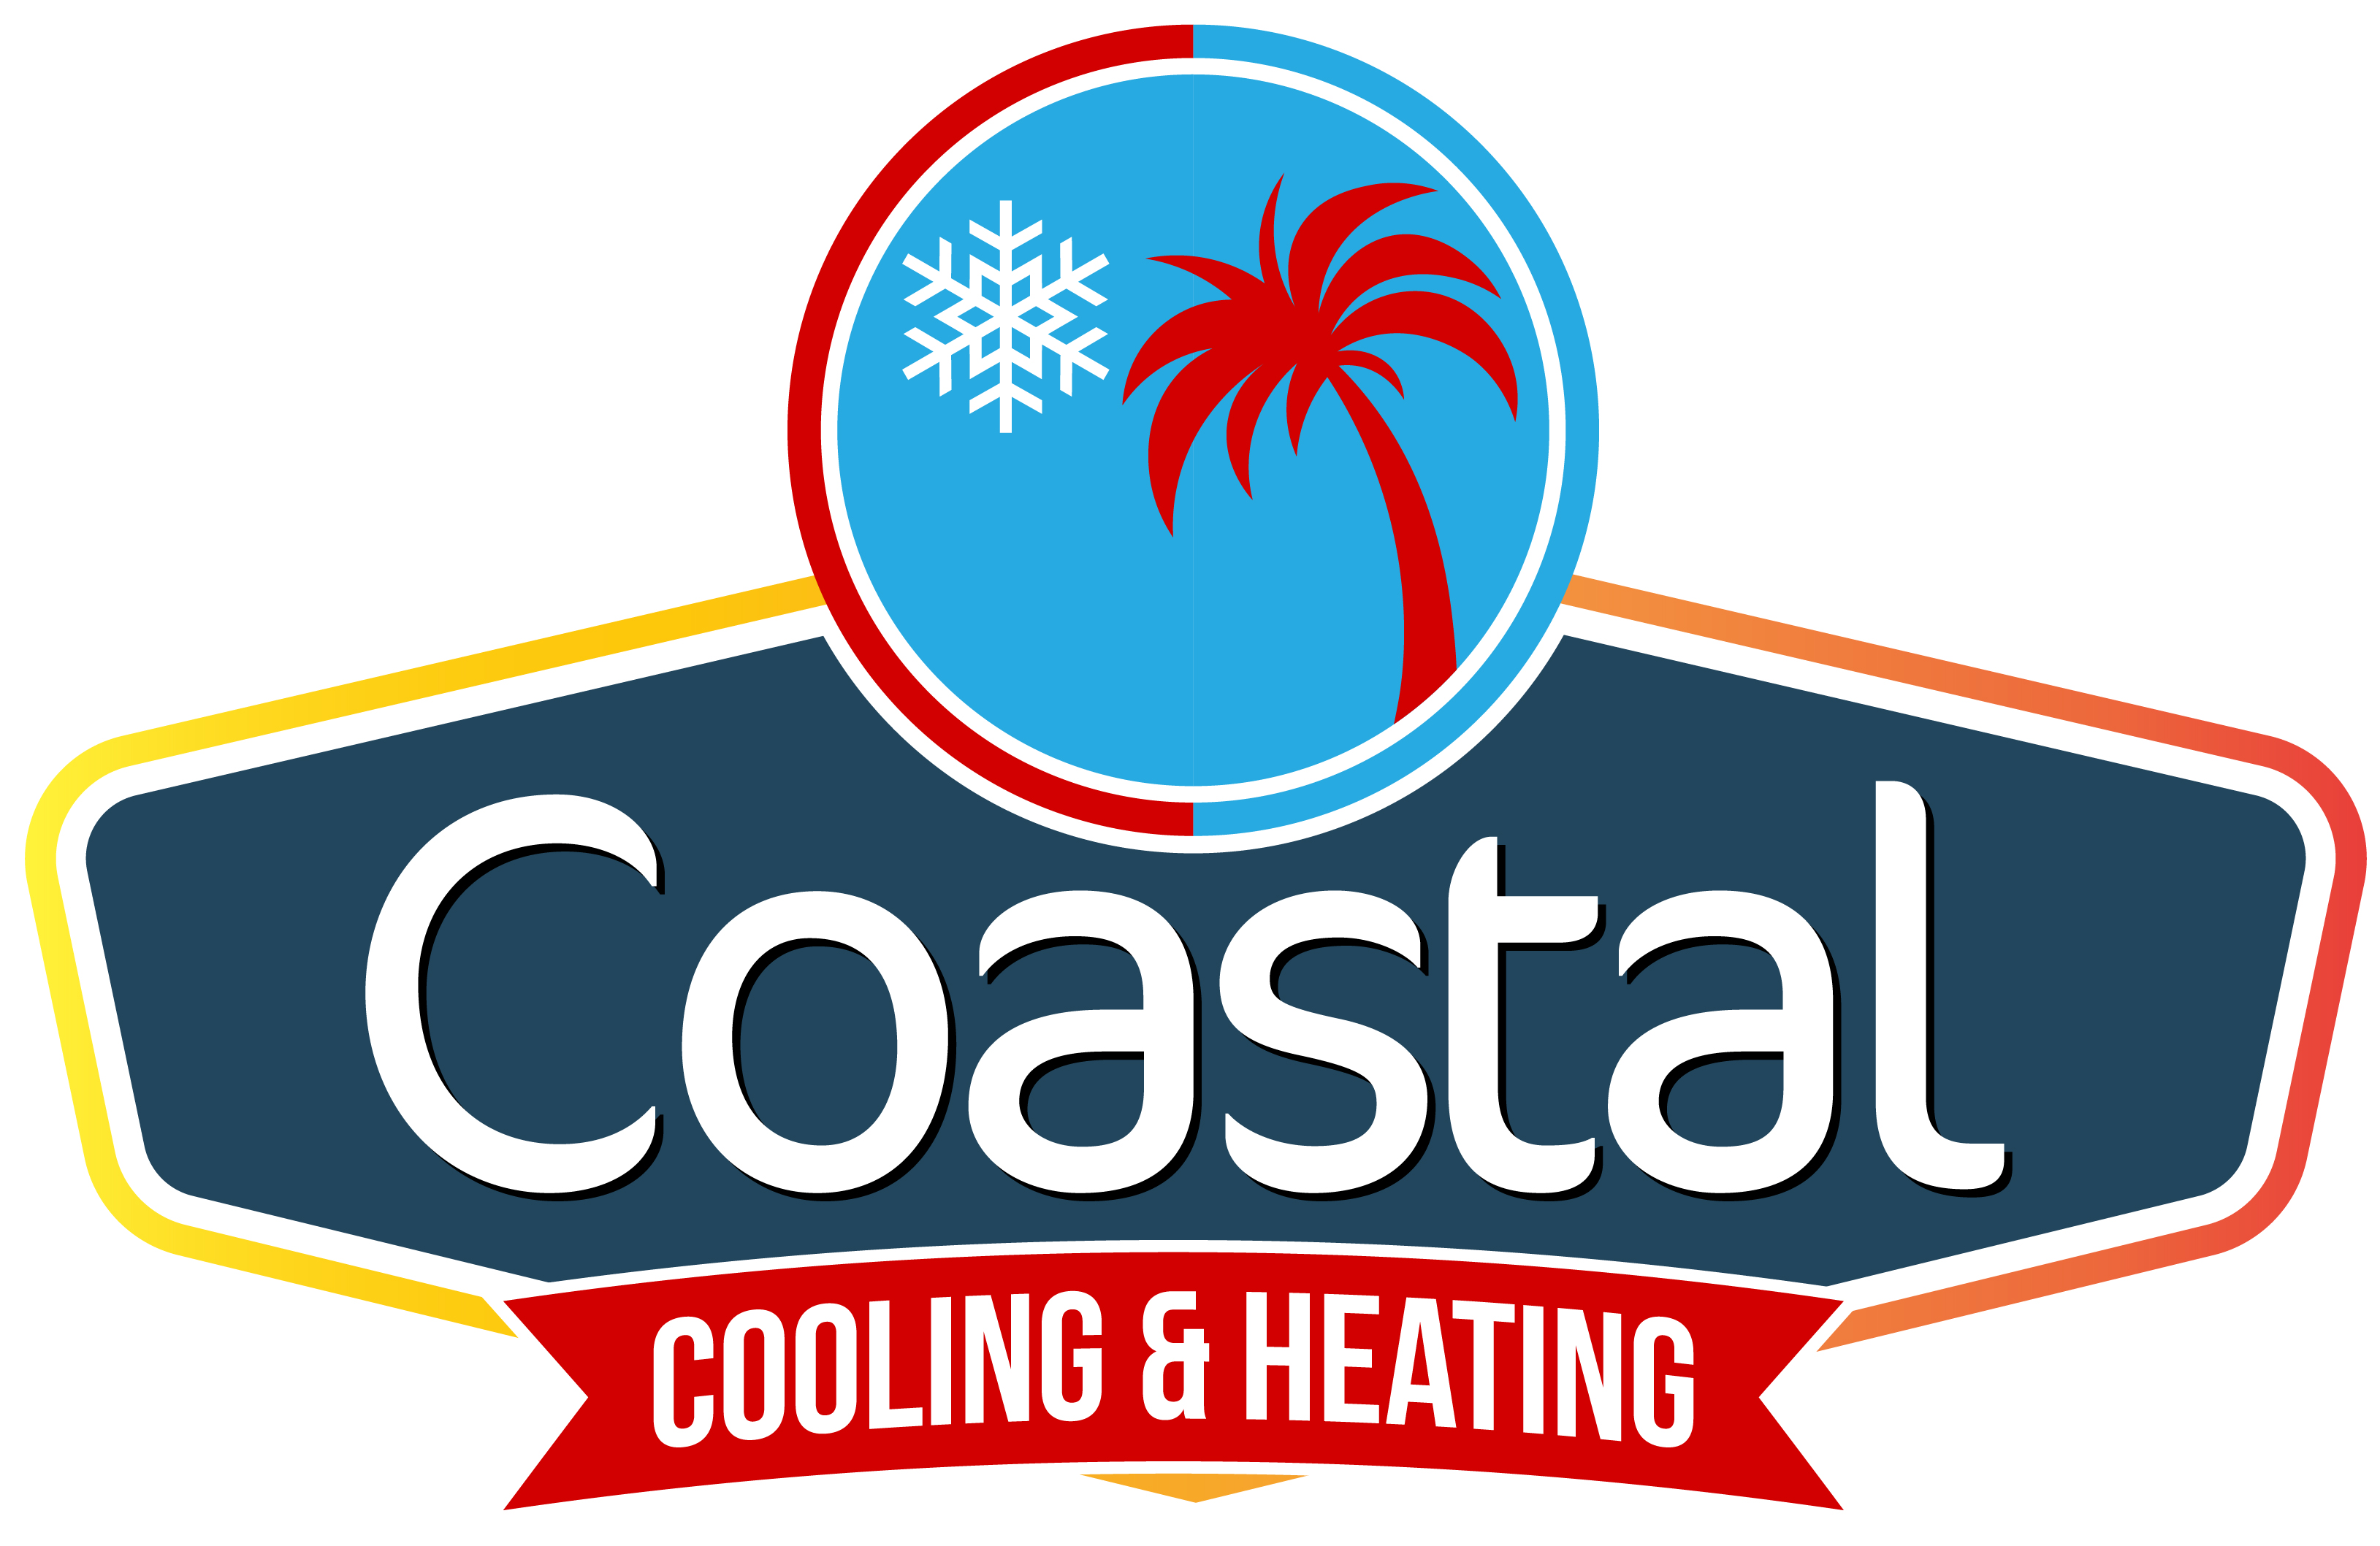 Coastal Cooling & Heating